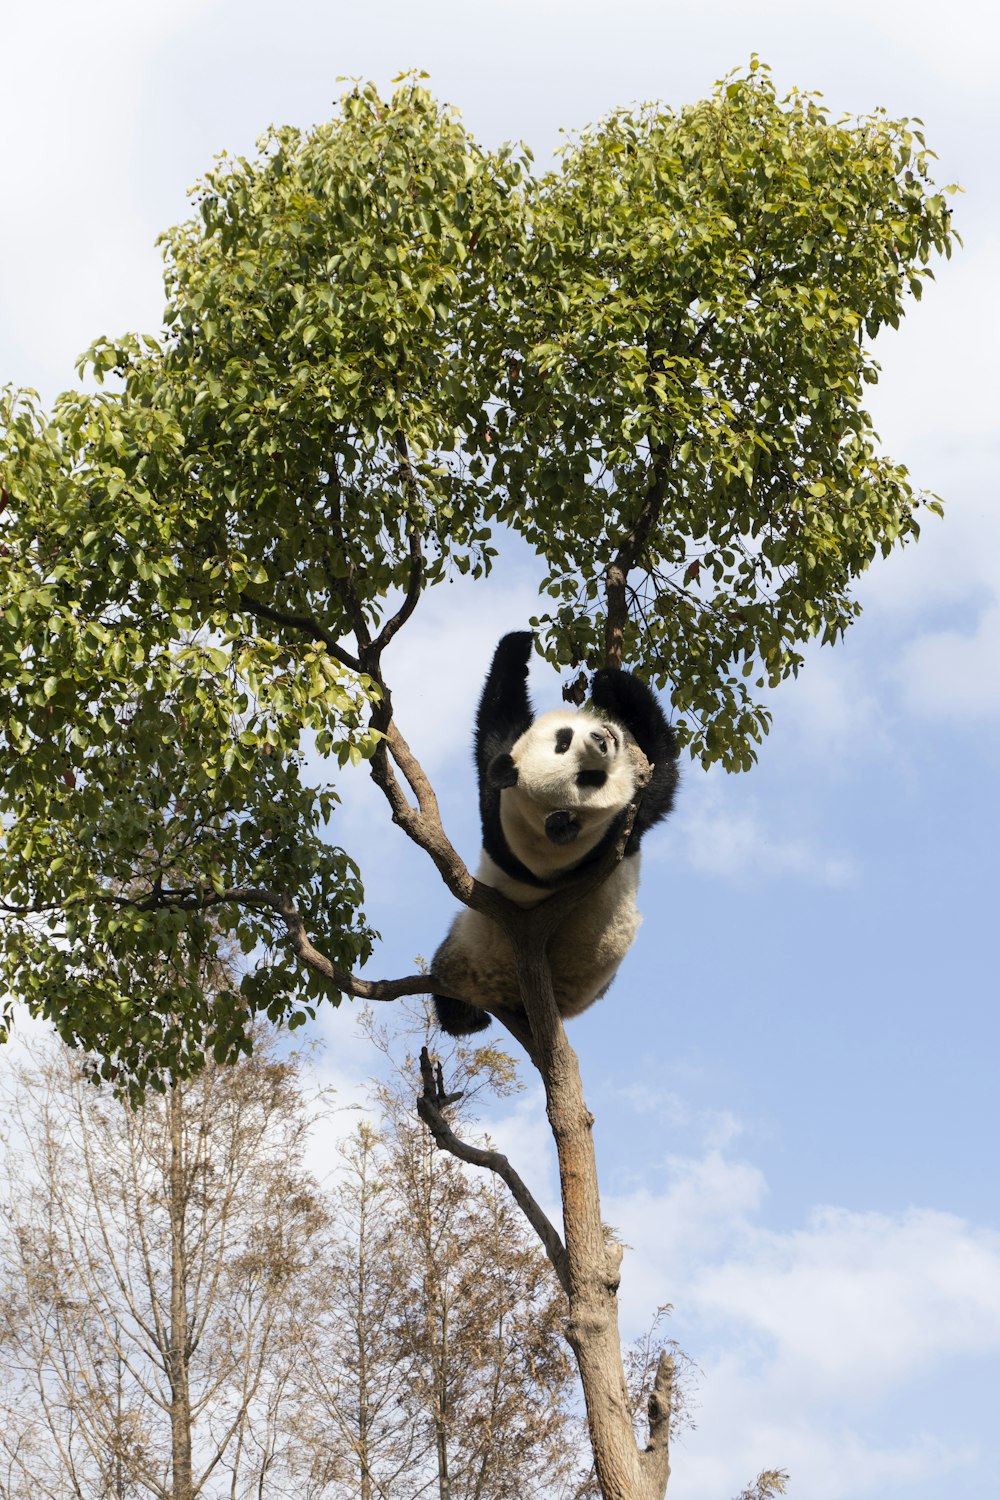 a panda bear climbing up a tree branch